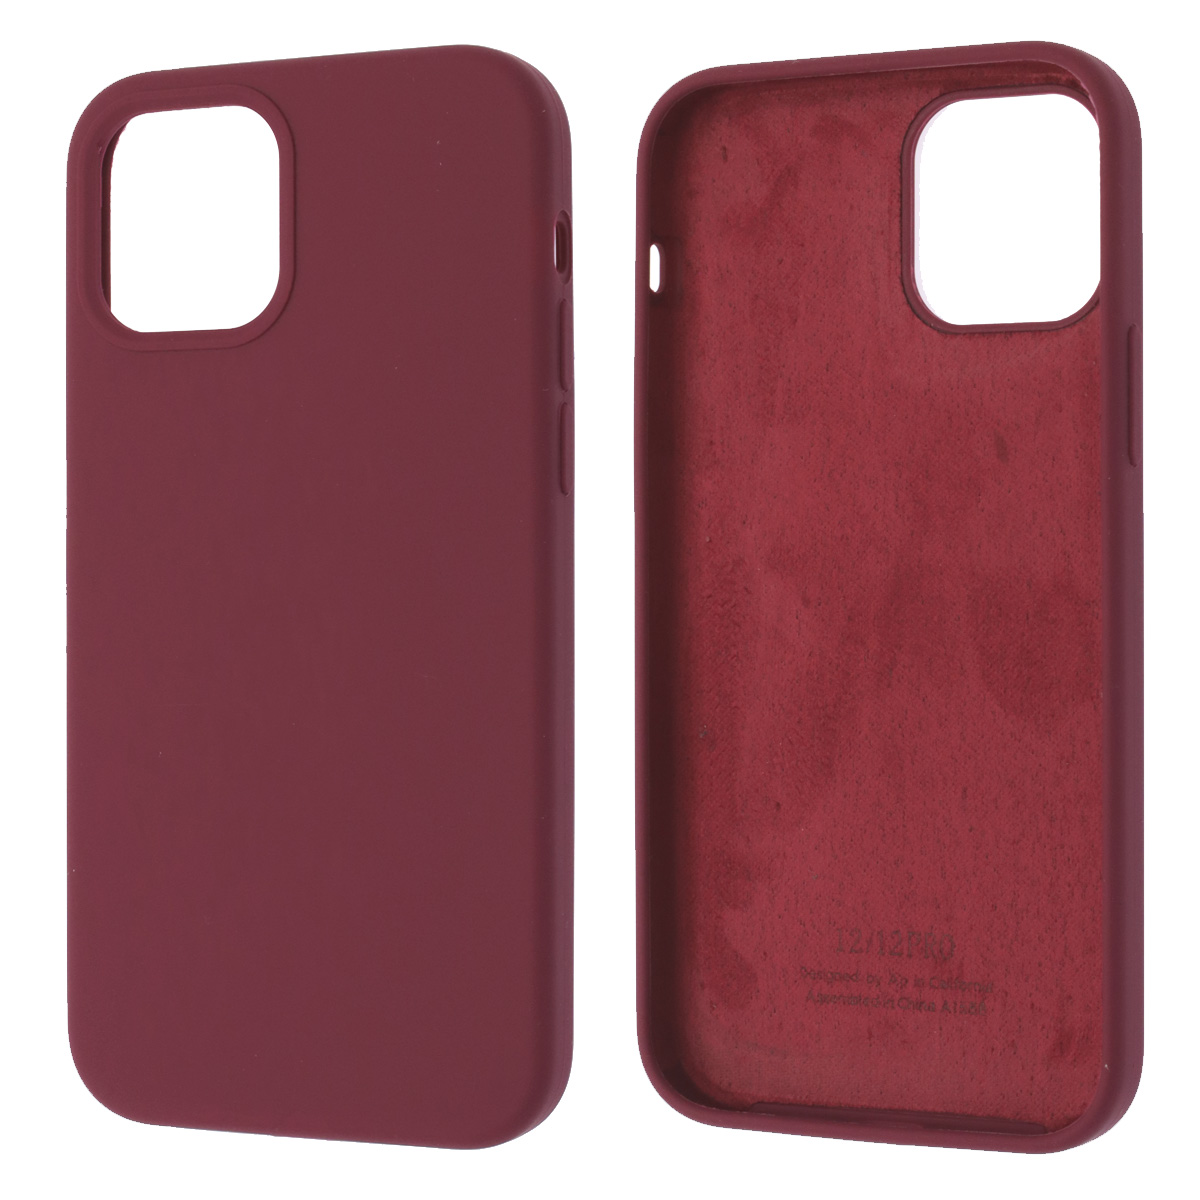 Чехол накладка Silicon Case для APPLE iPhone 12, iPhone 12 Pro, силикон, бархат, цвет бордовый